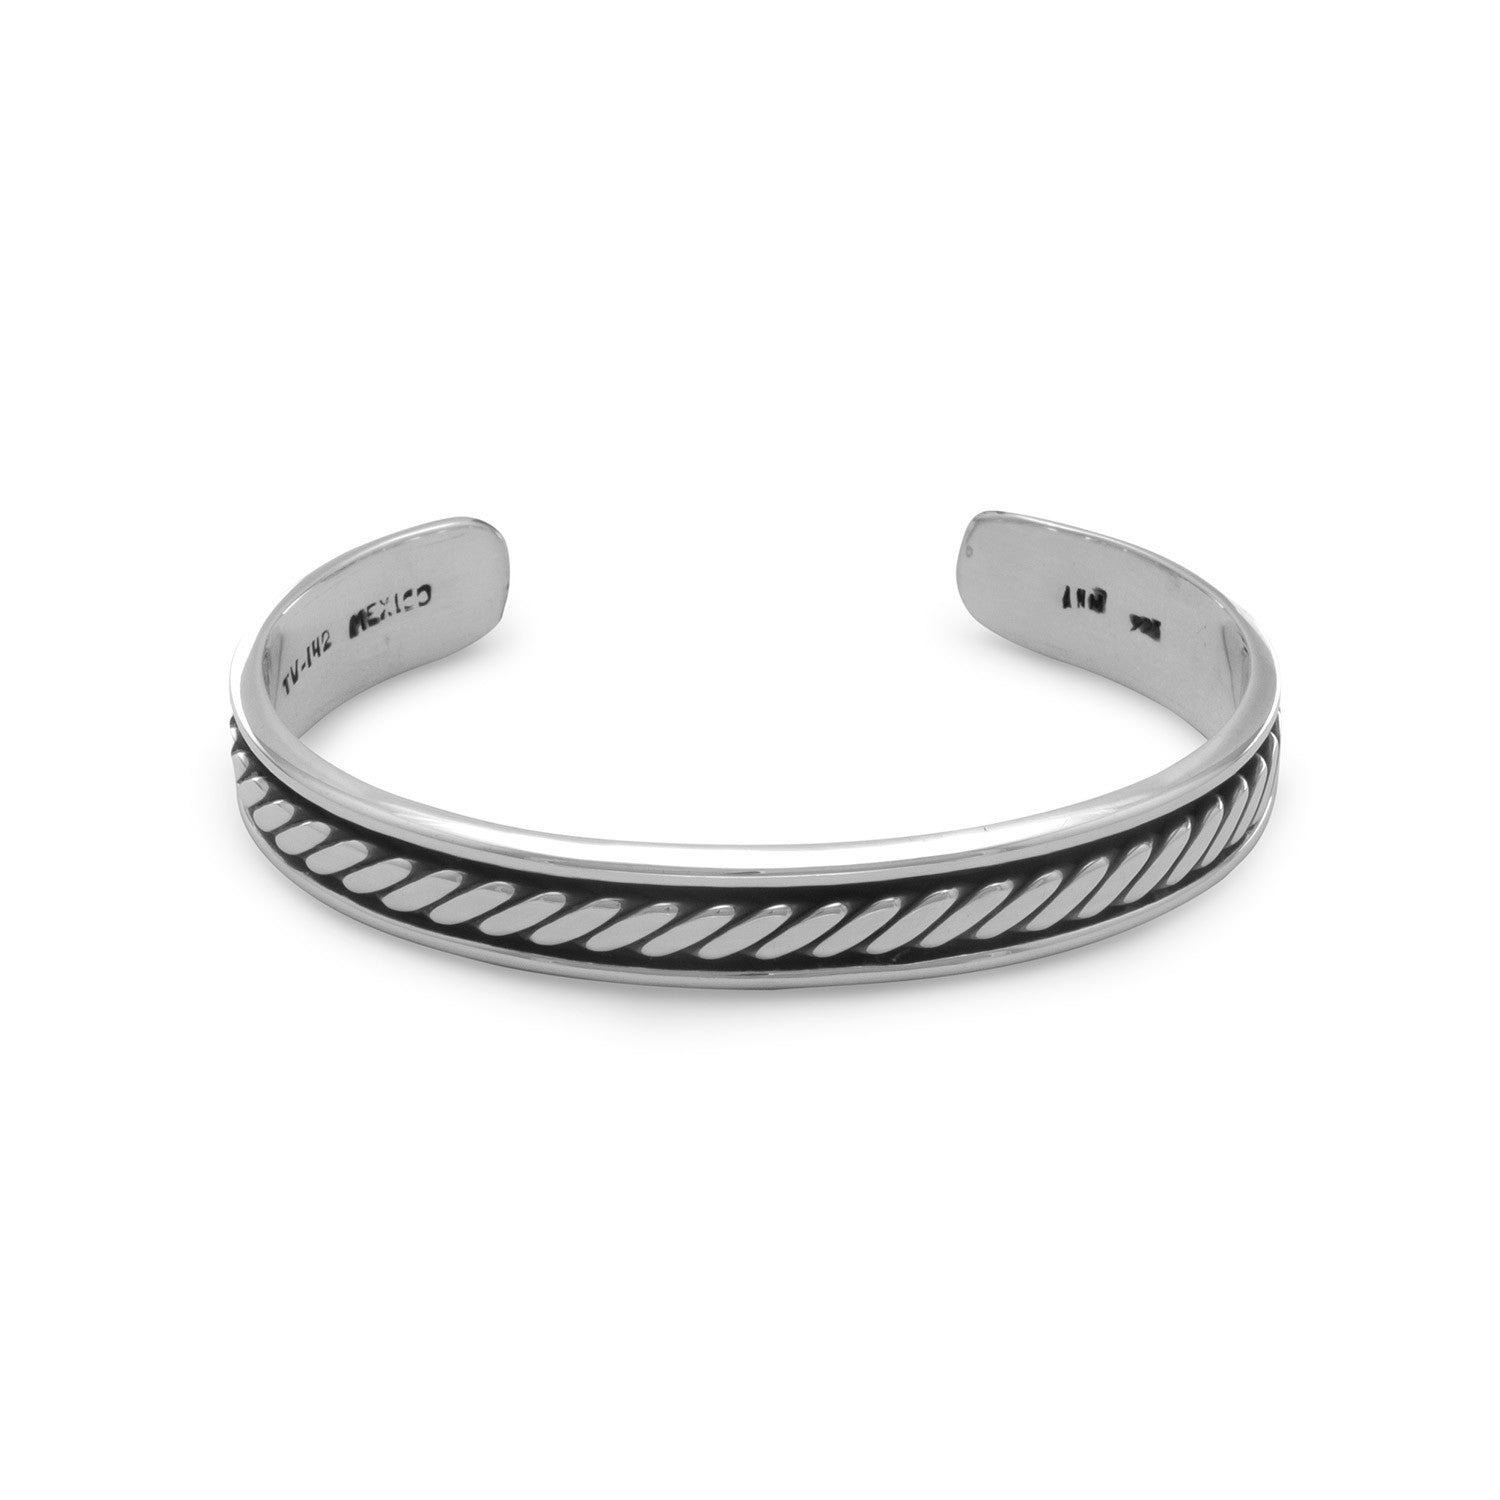 Oxidized Men's Cuff Bracelet with Rope Design